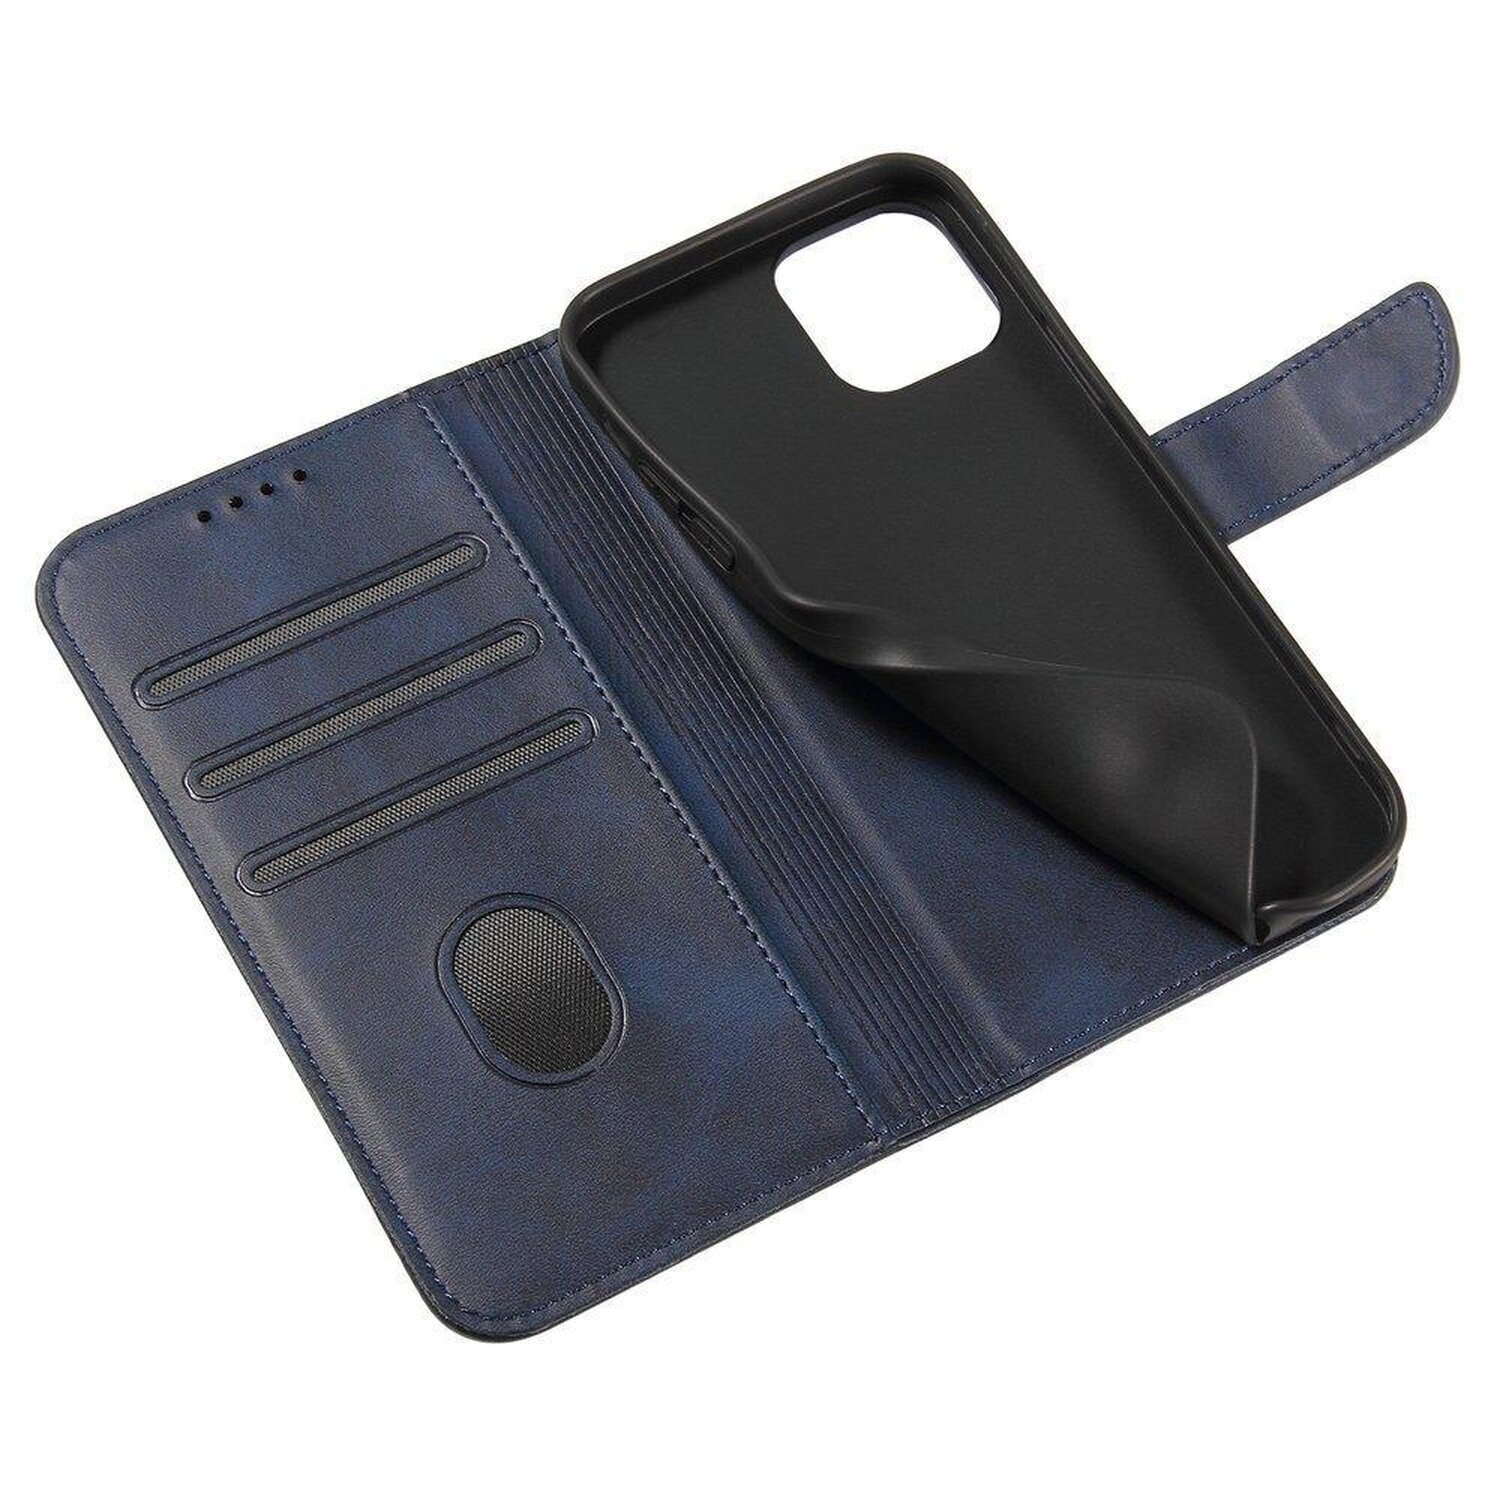 Magnet Blau Case, Bookcover, S21, Samsung, Galaxy COFI